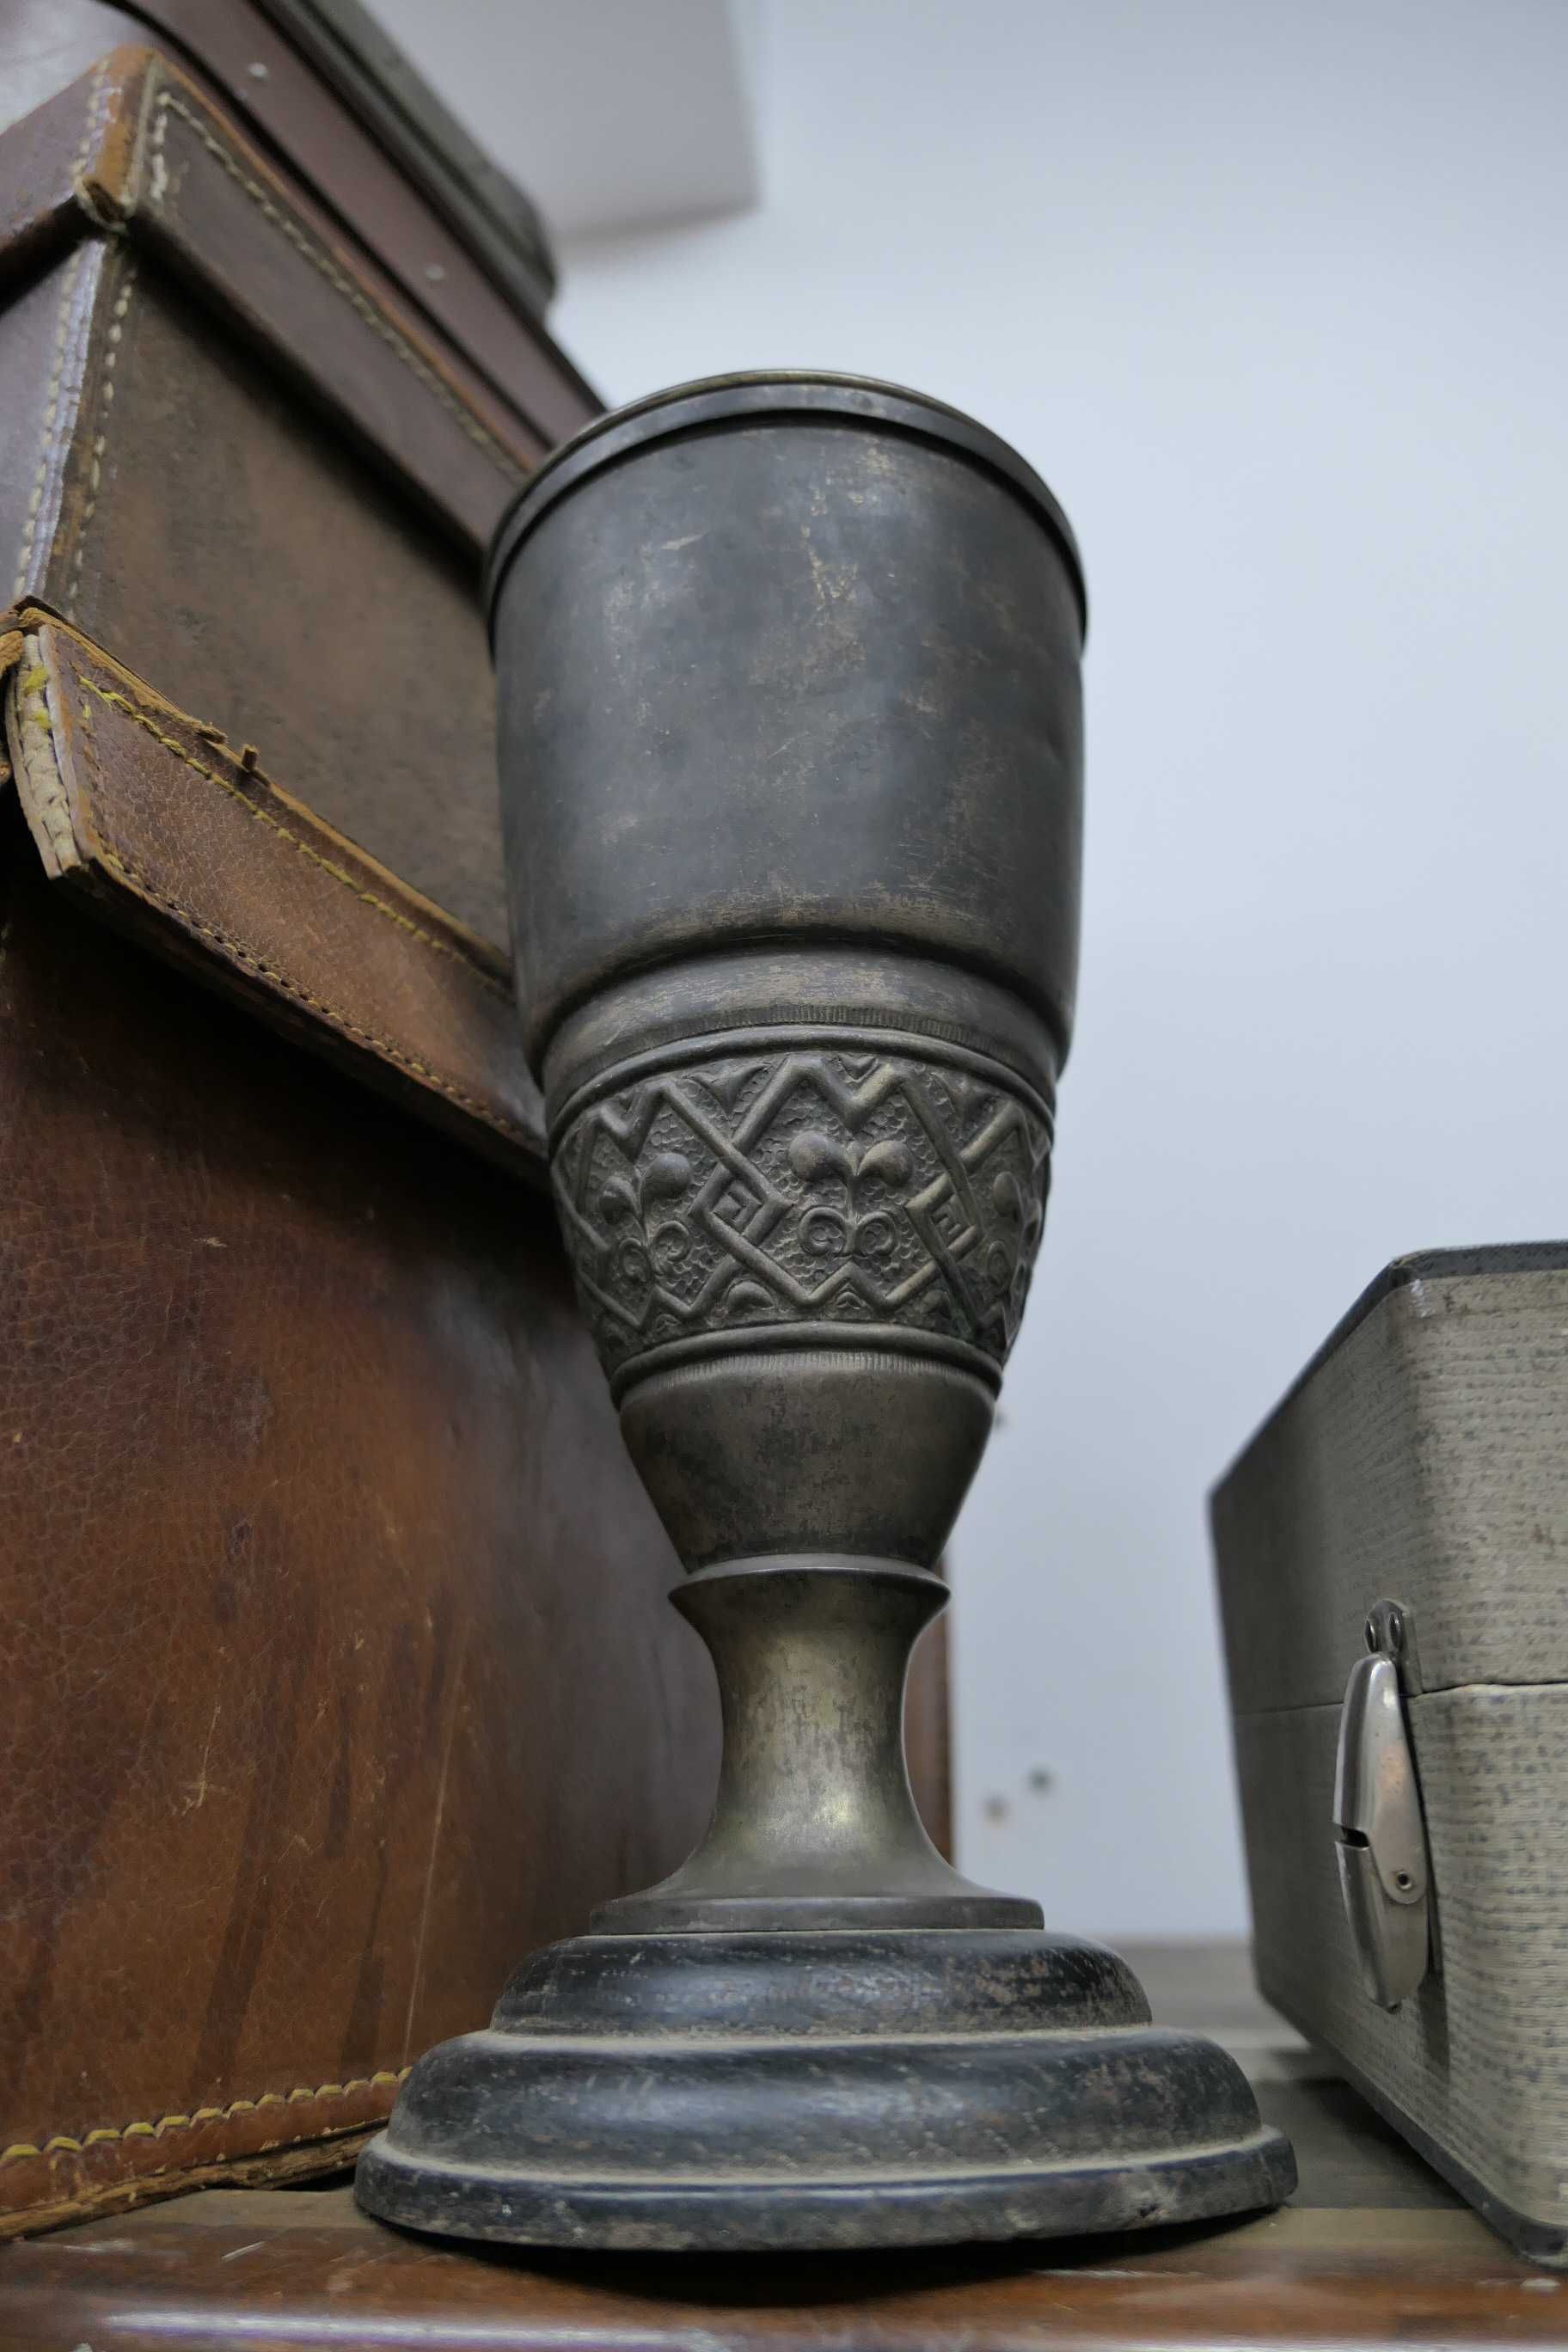 Cupa Vas Urna  Metalic + Lemn RPR Electrobanat Timisoara h 35 cm